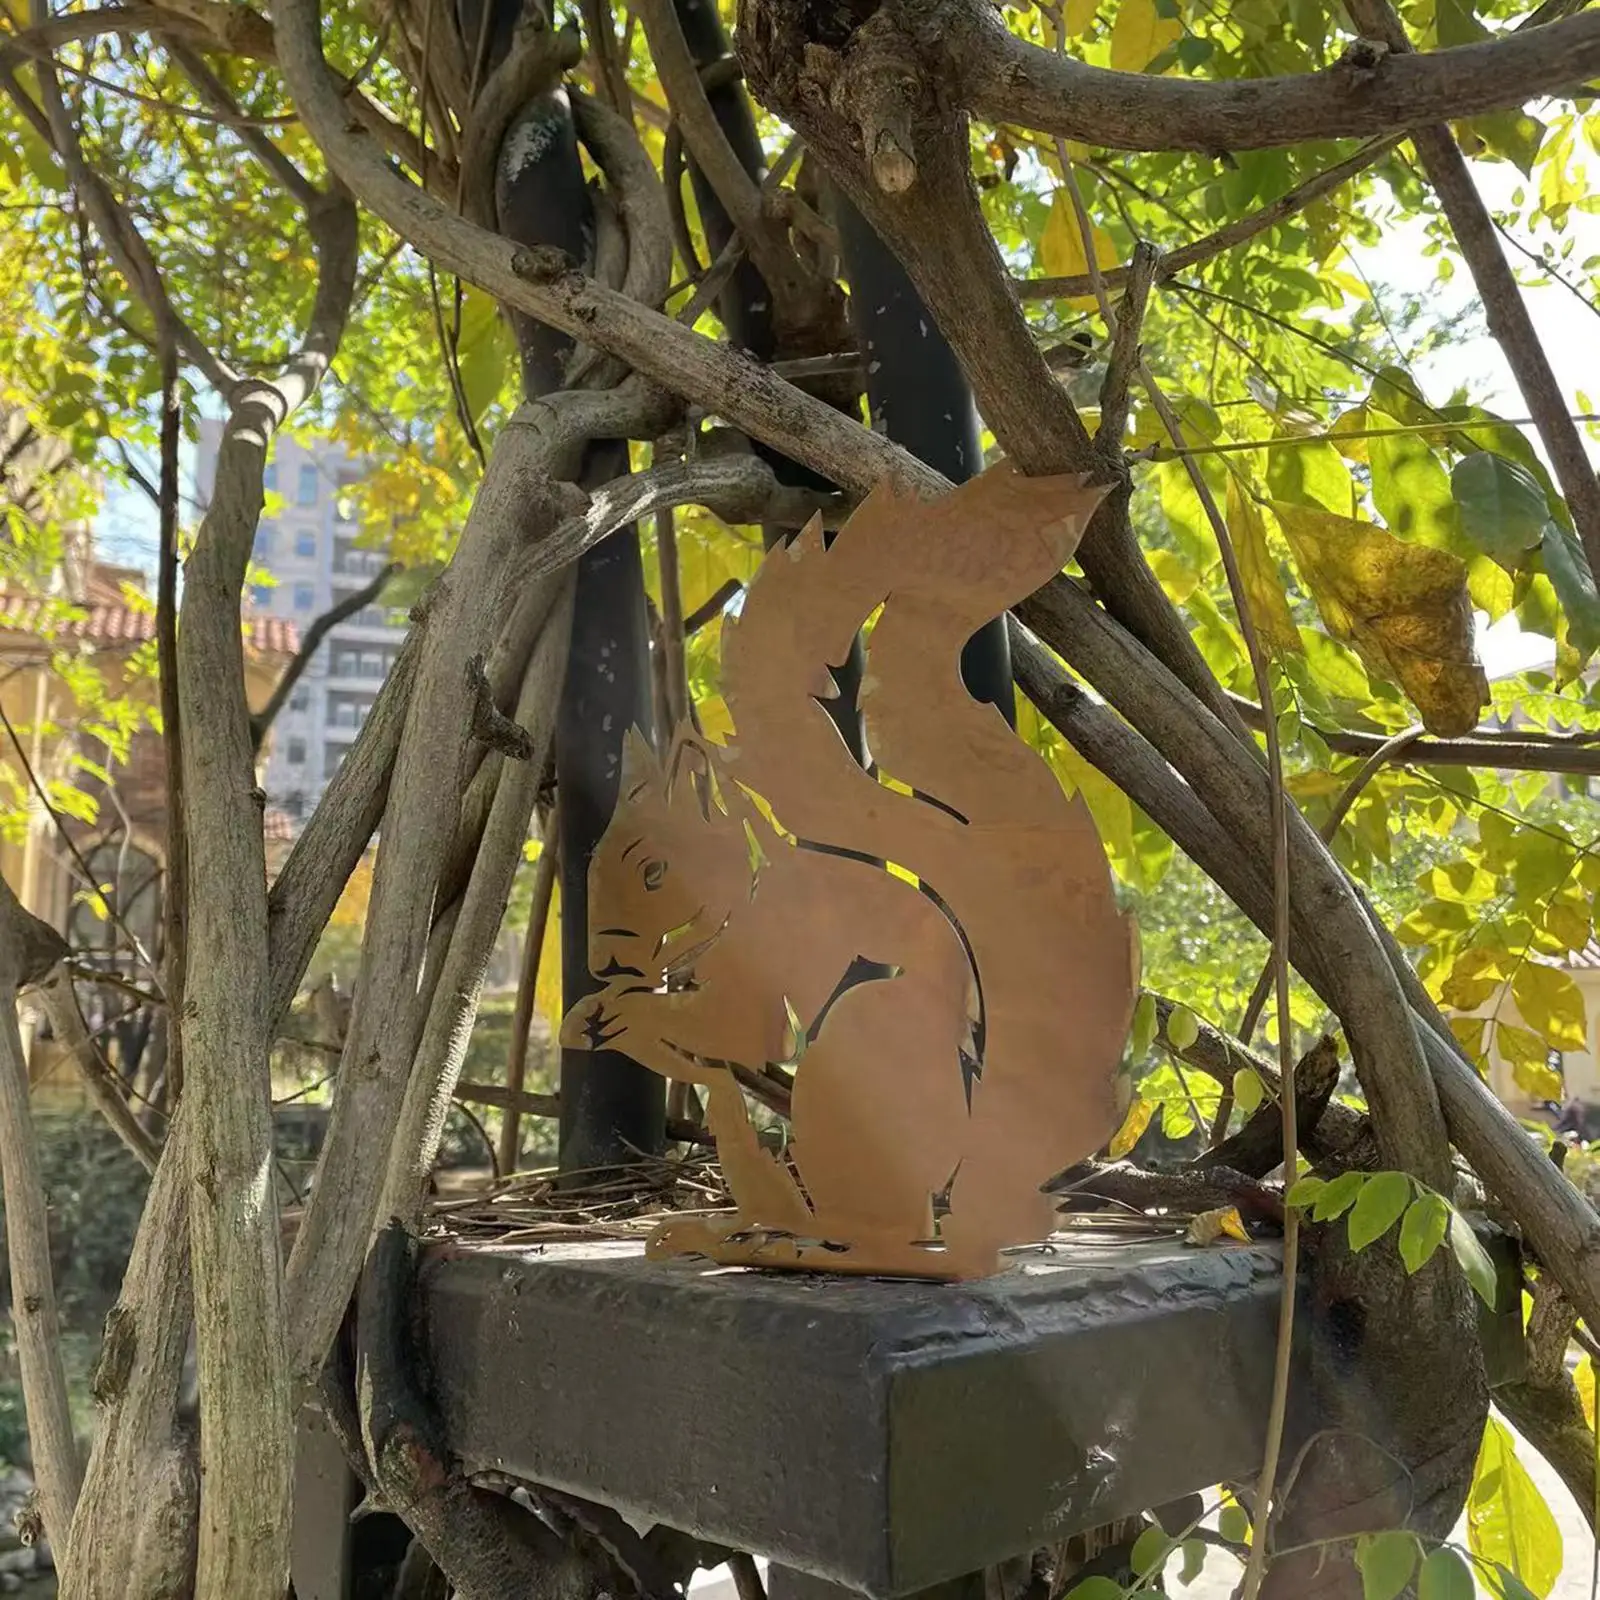 Metal Squirrel Silhouette Garden Statue Lawn Ornaments Animal Silhouette for Backyard Ornaments Decoration